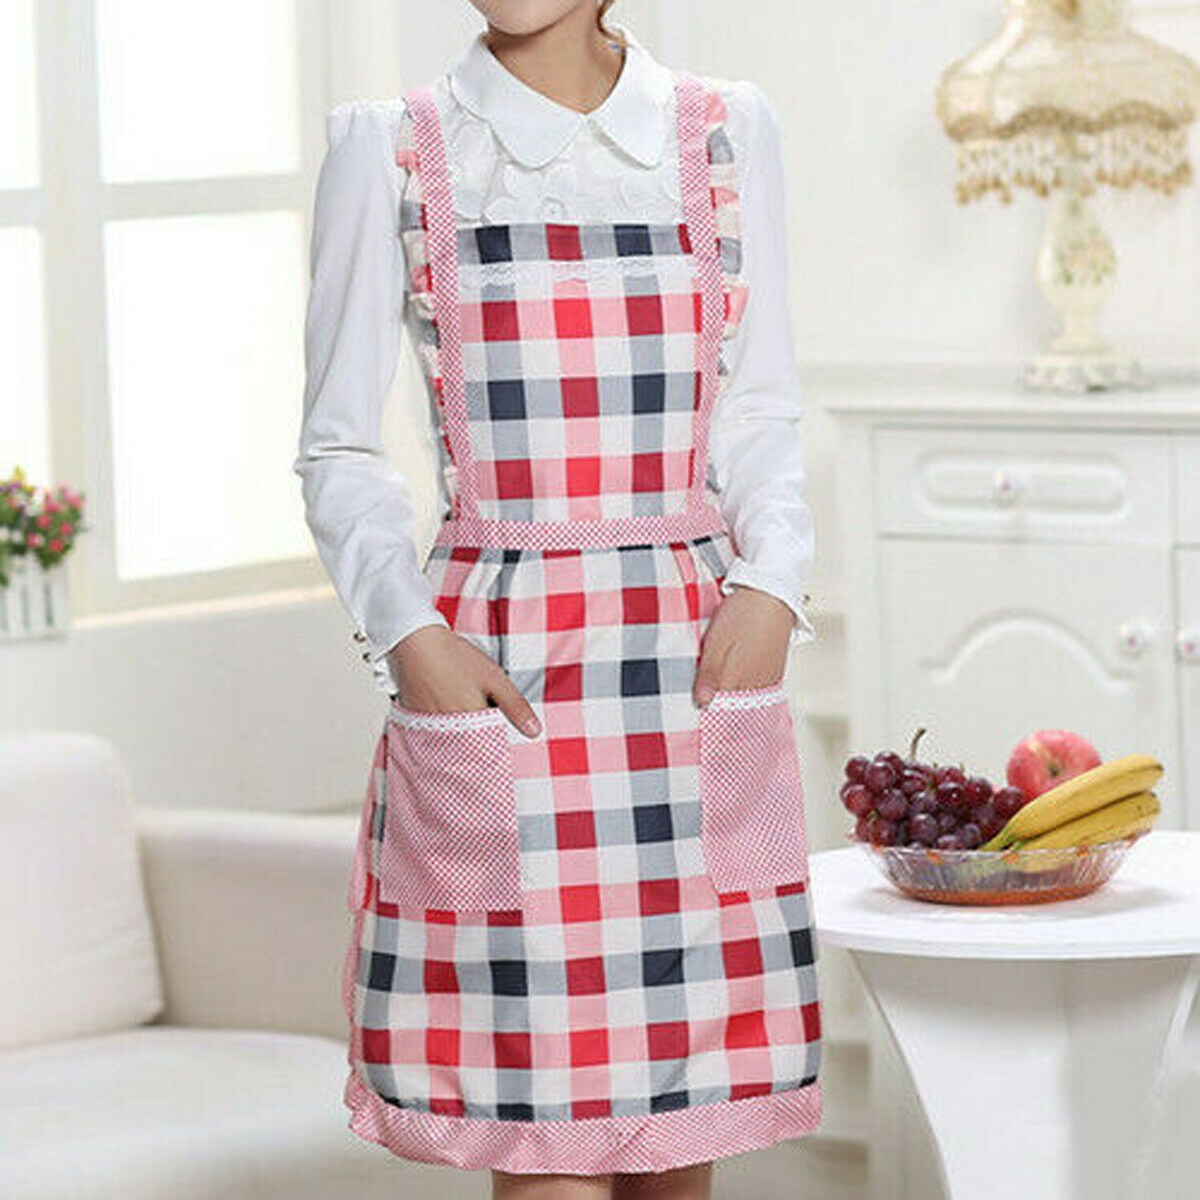 Hot 1PC Women Muti-Color Cooking Kitchen Restaurant Bib Apron Dress with Pocket 